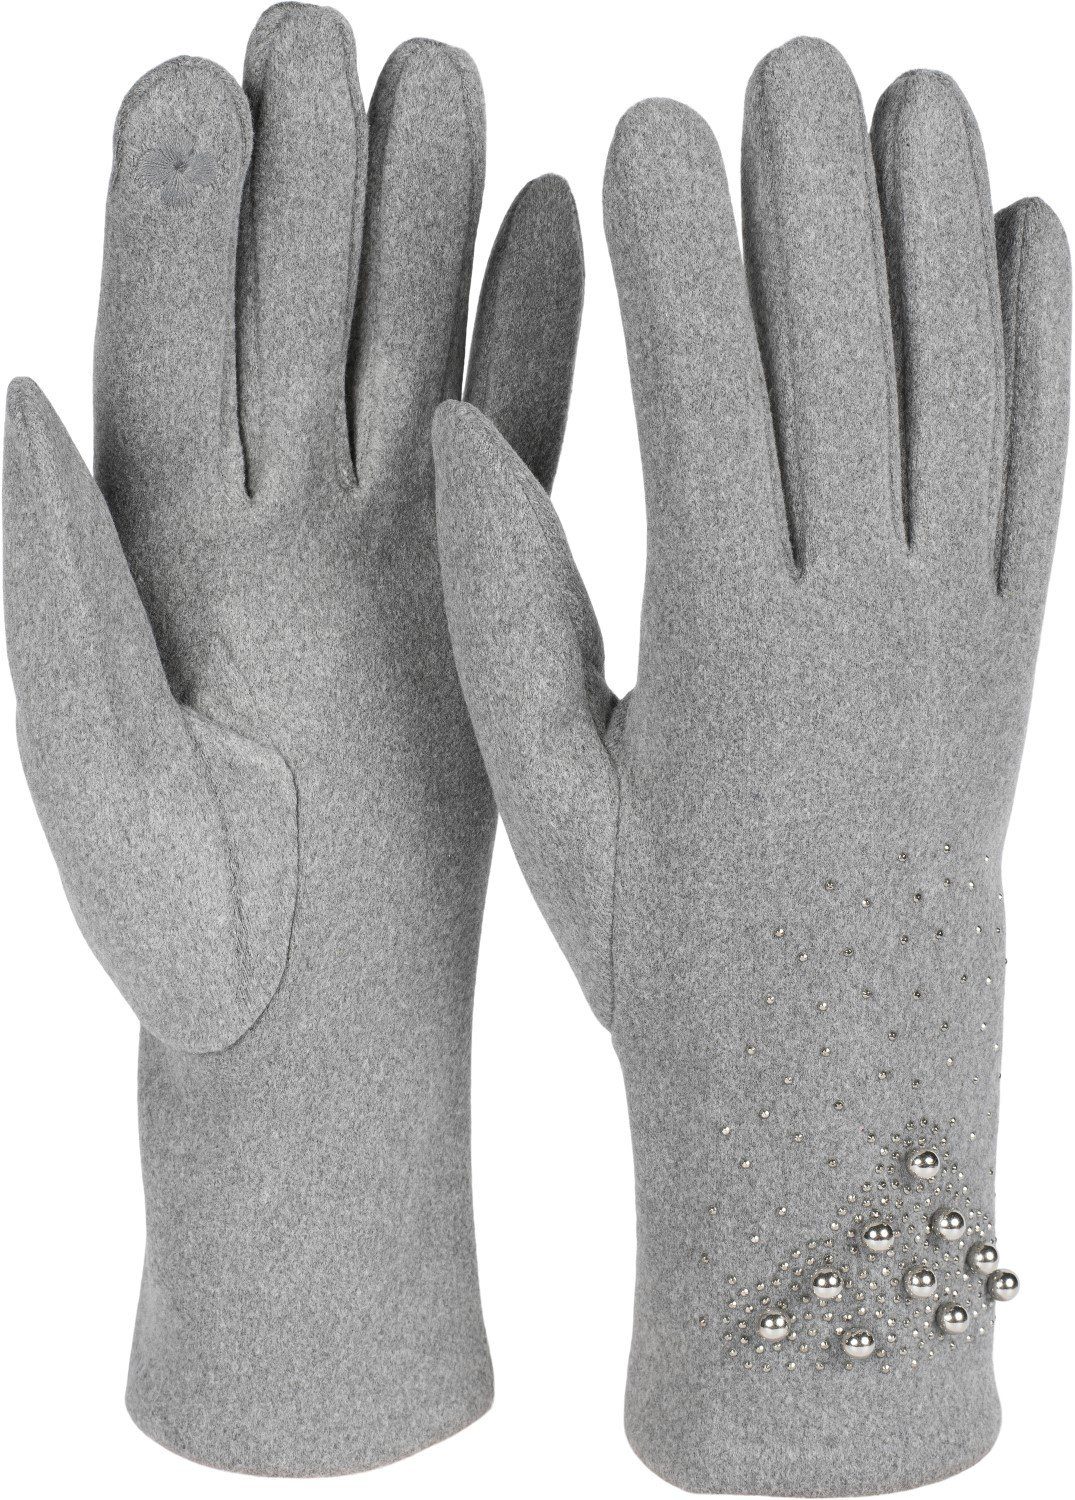 styleBREAKER Fleecehandschuhe Touchscreen Handschuhe mit Strass und Perlen Hellgrau